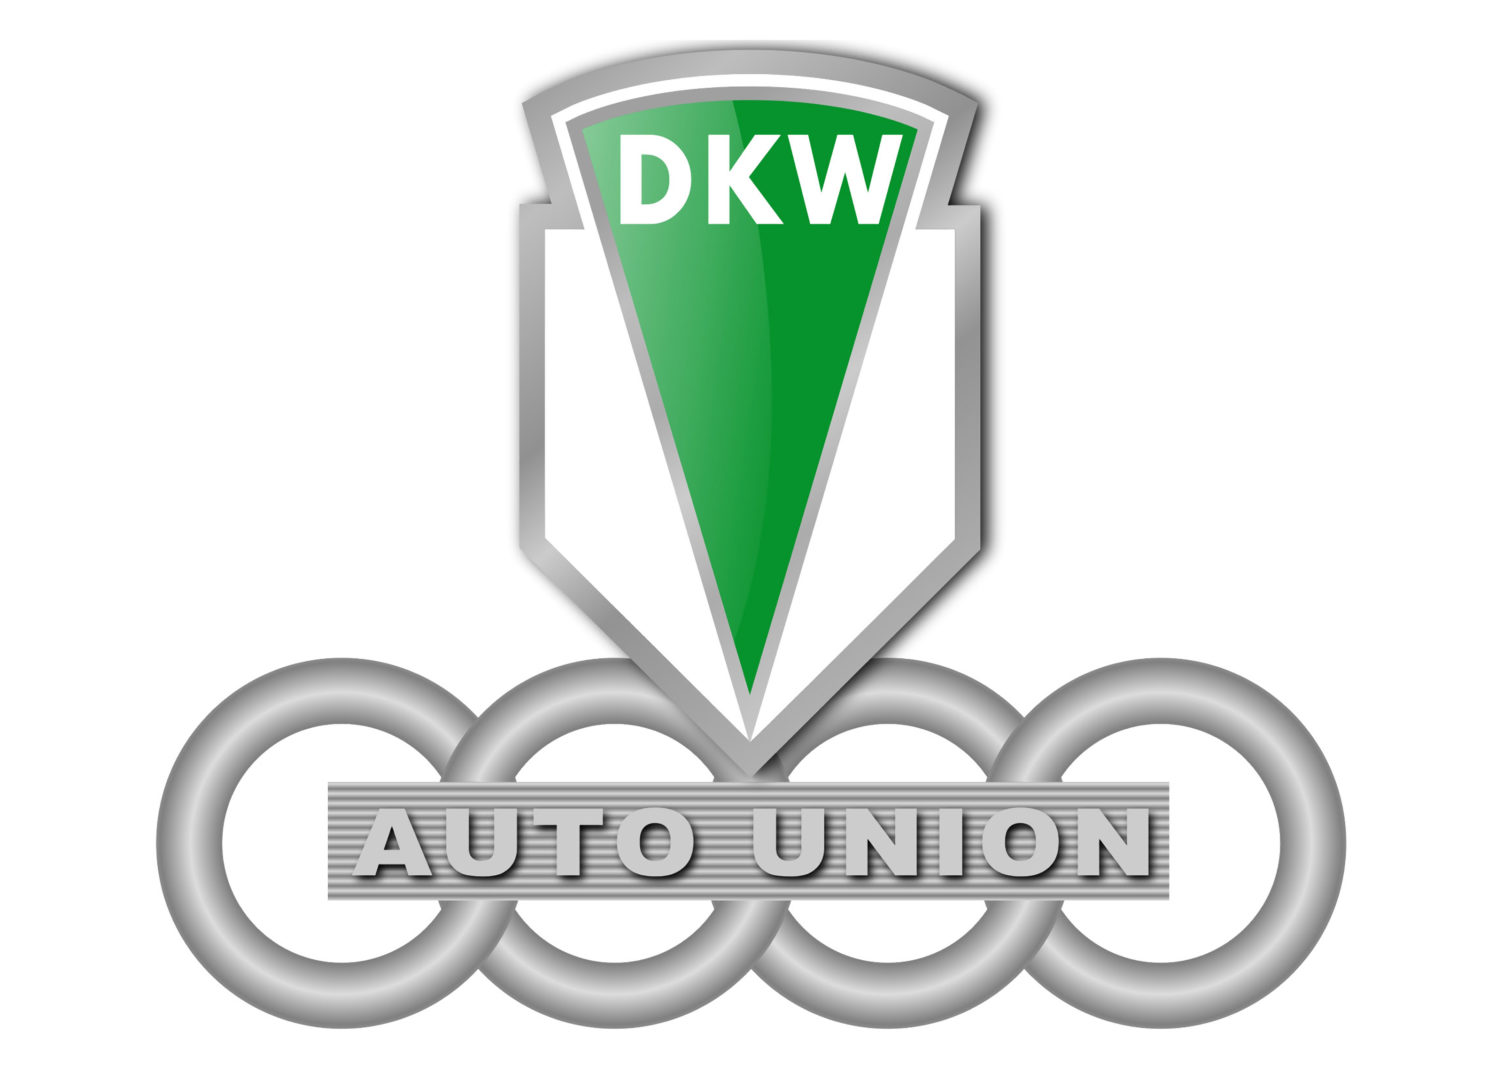 DKW emblem